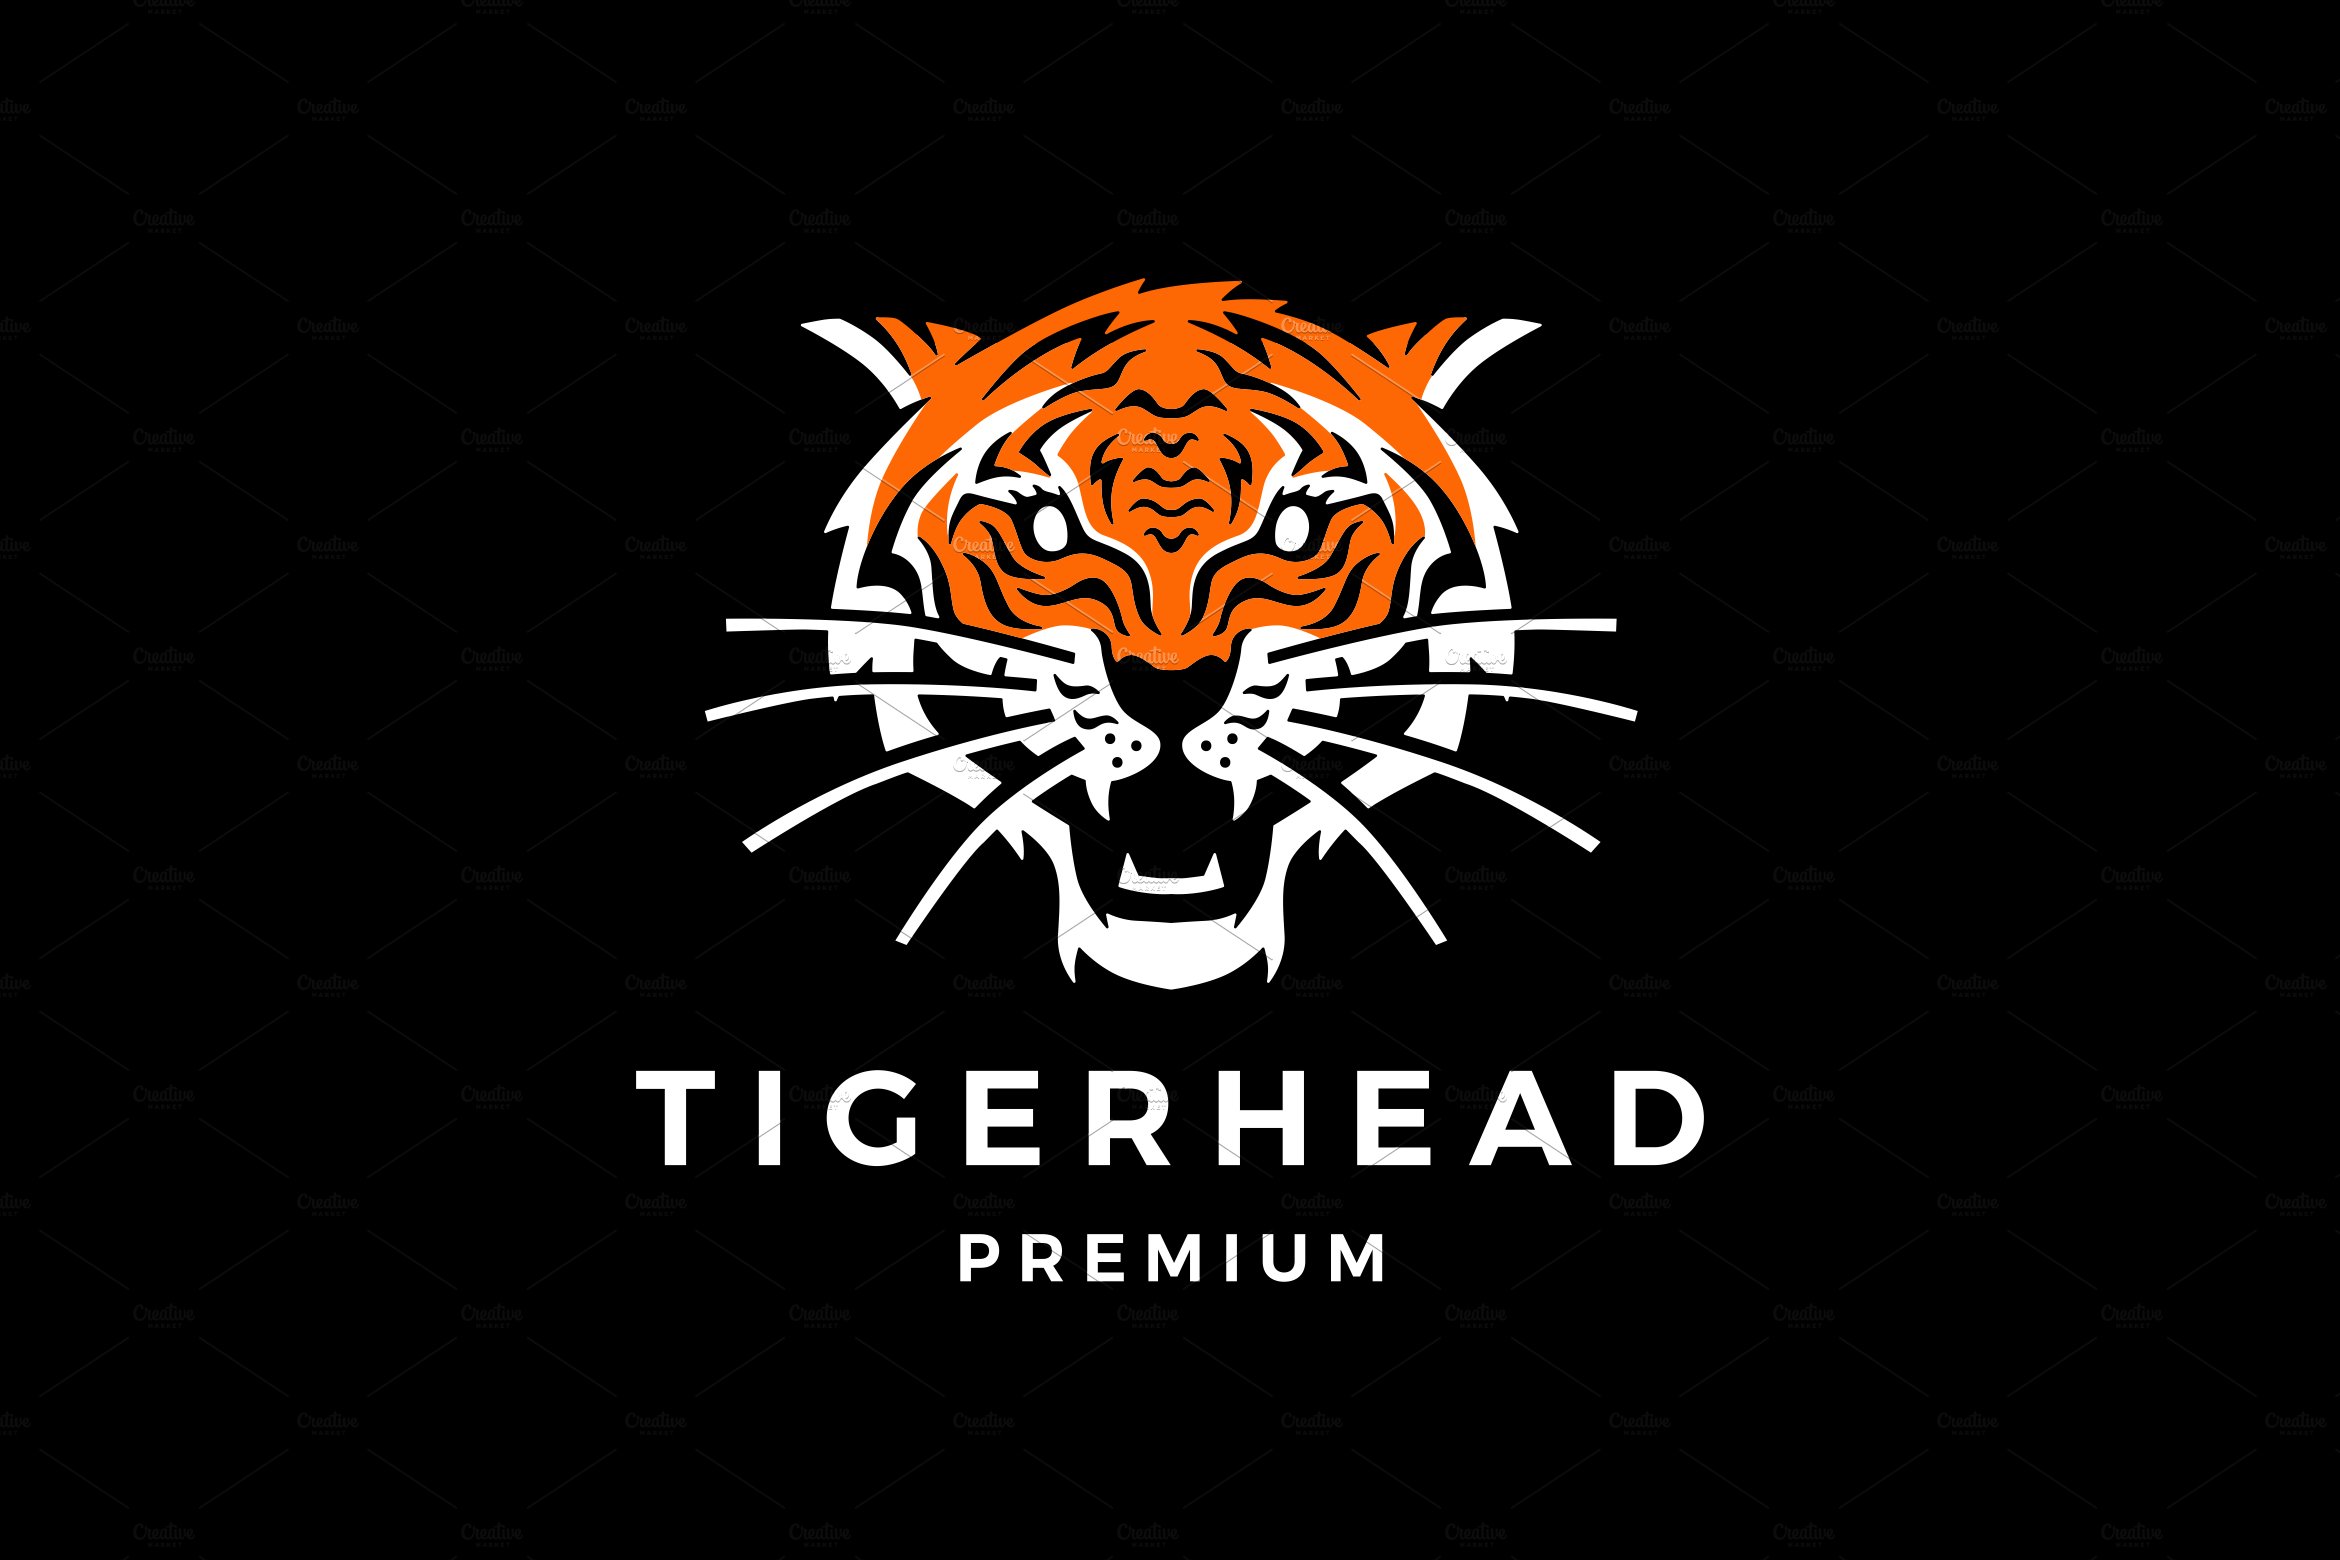 tiger head logo vector icon cover image.